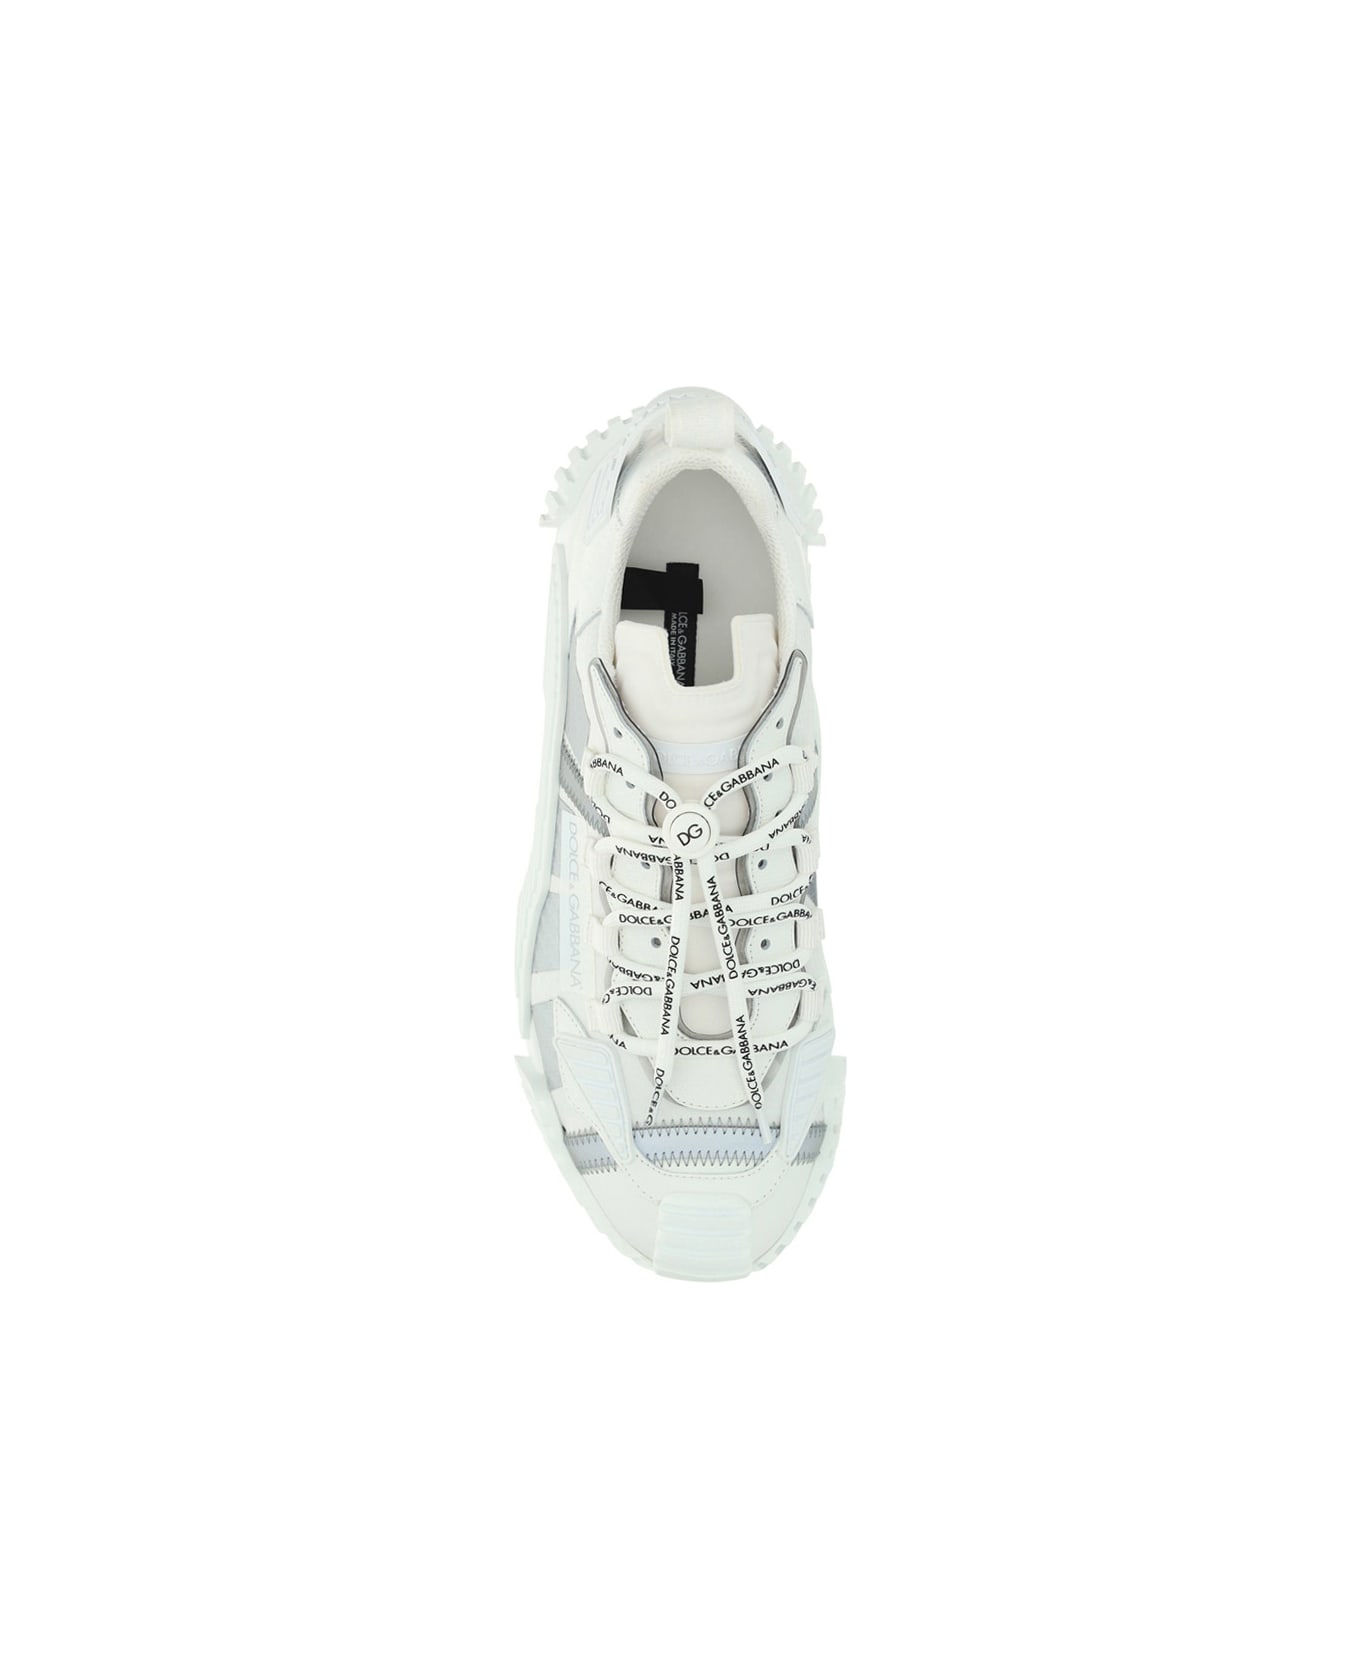 Dolce & Gabbana Low Sneakers - Bianco/bianco